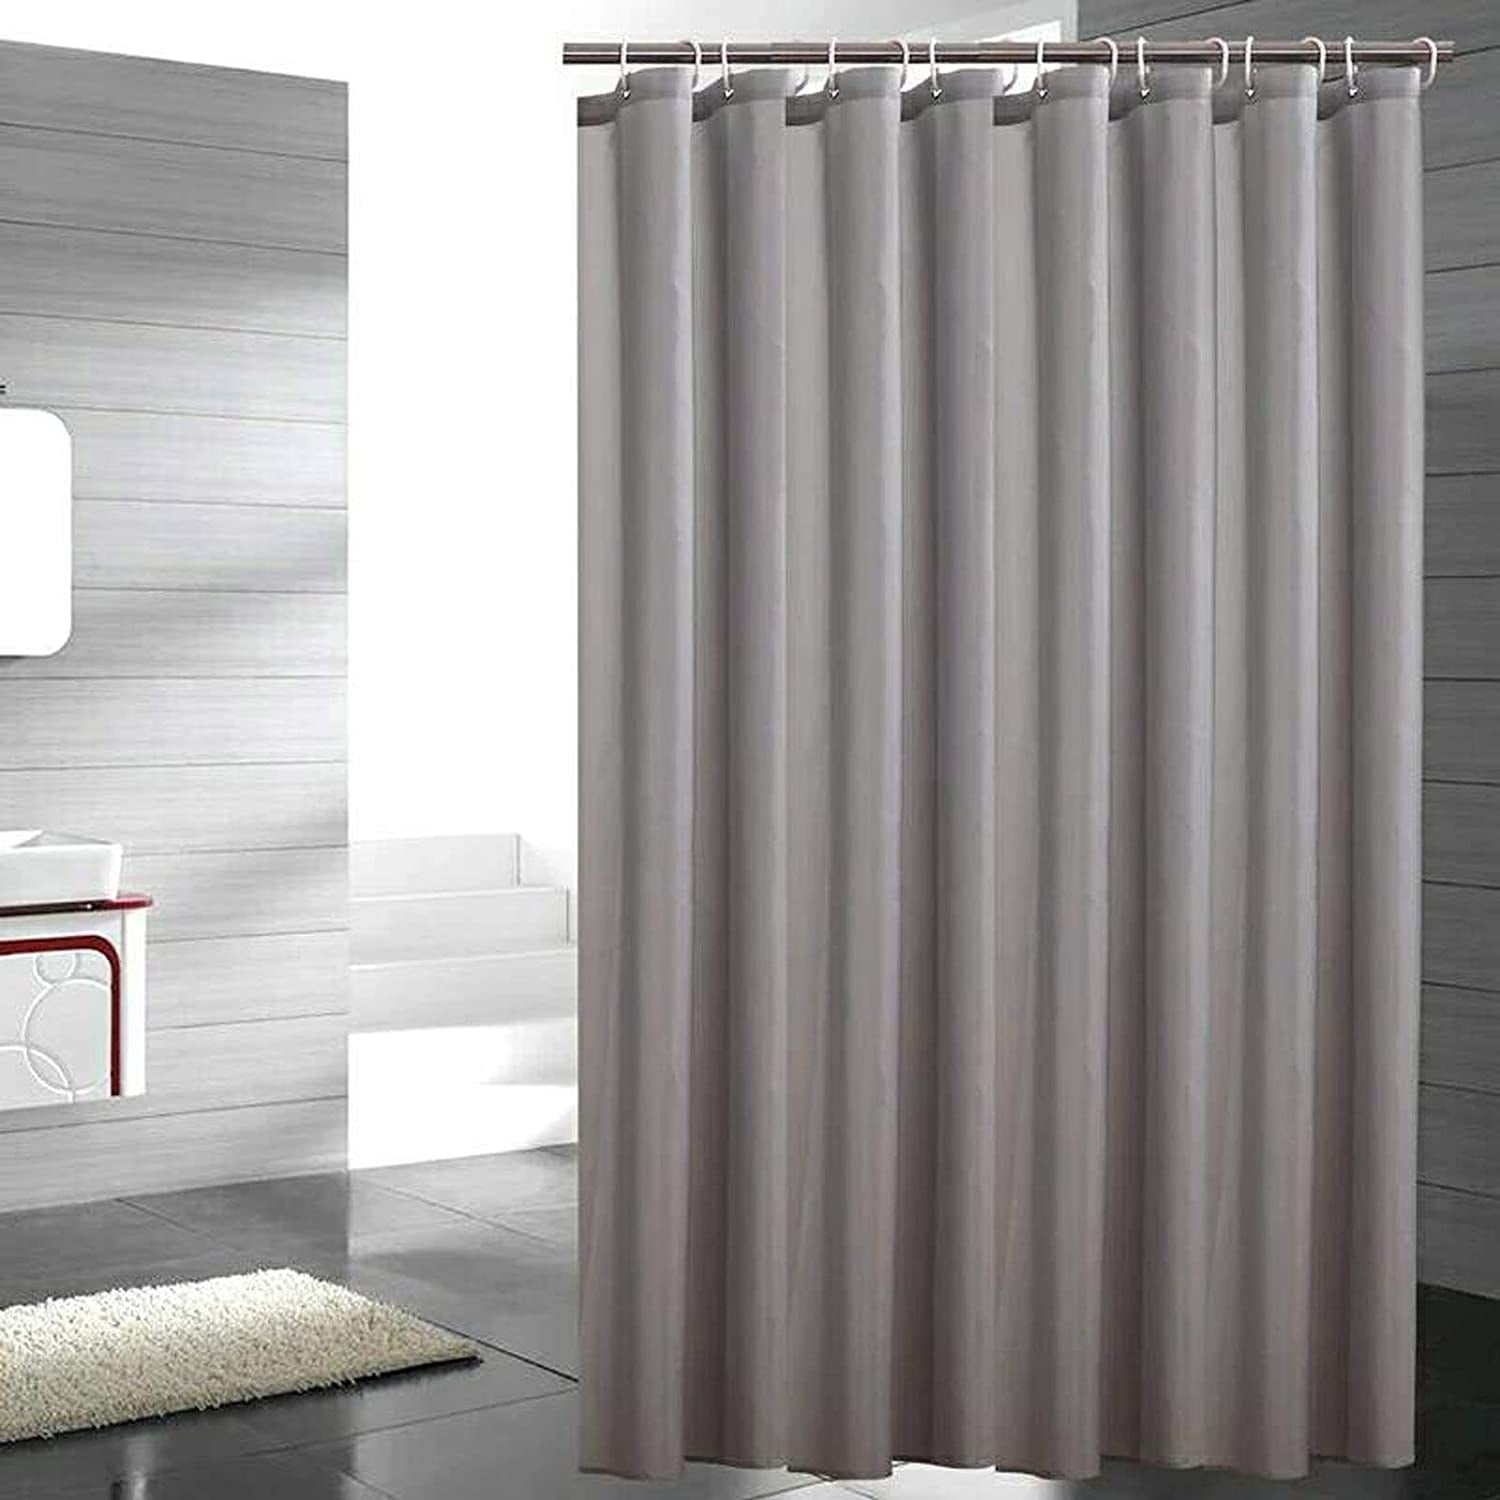 Parrot Powder Waterproof Bathroom Polyester Shower Curtain Liner Water Resistant 